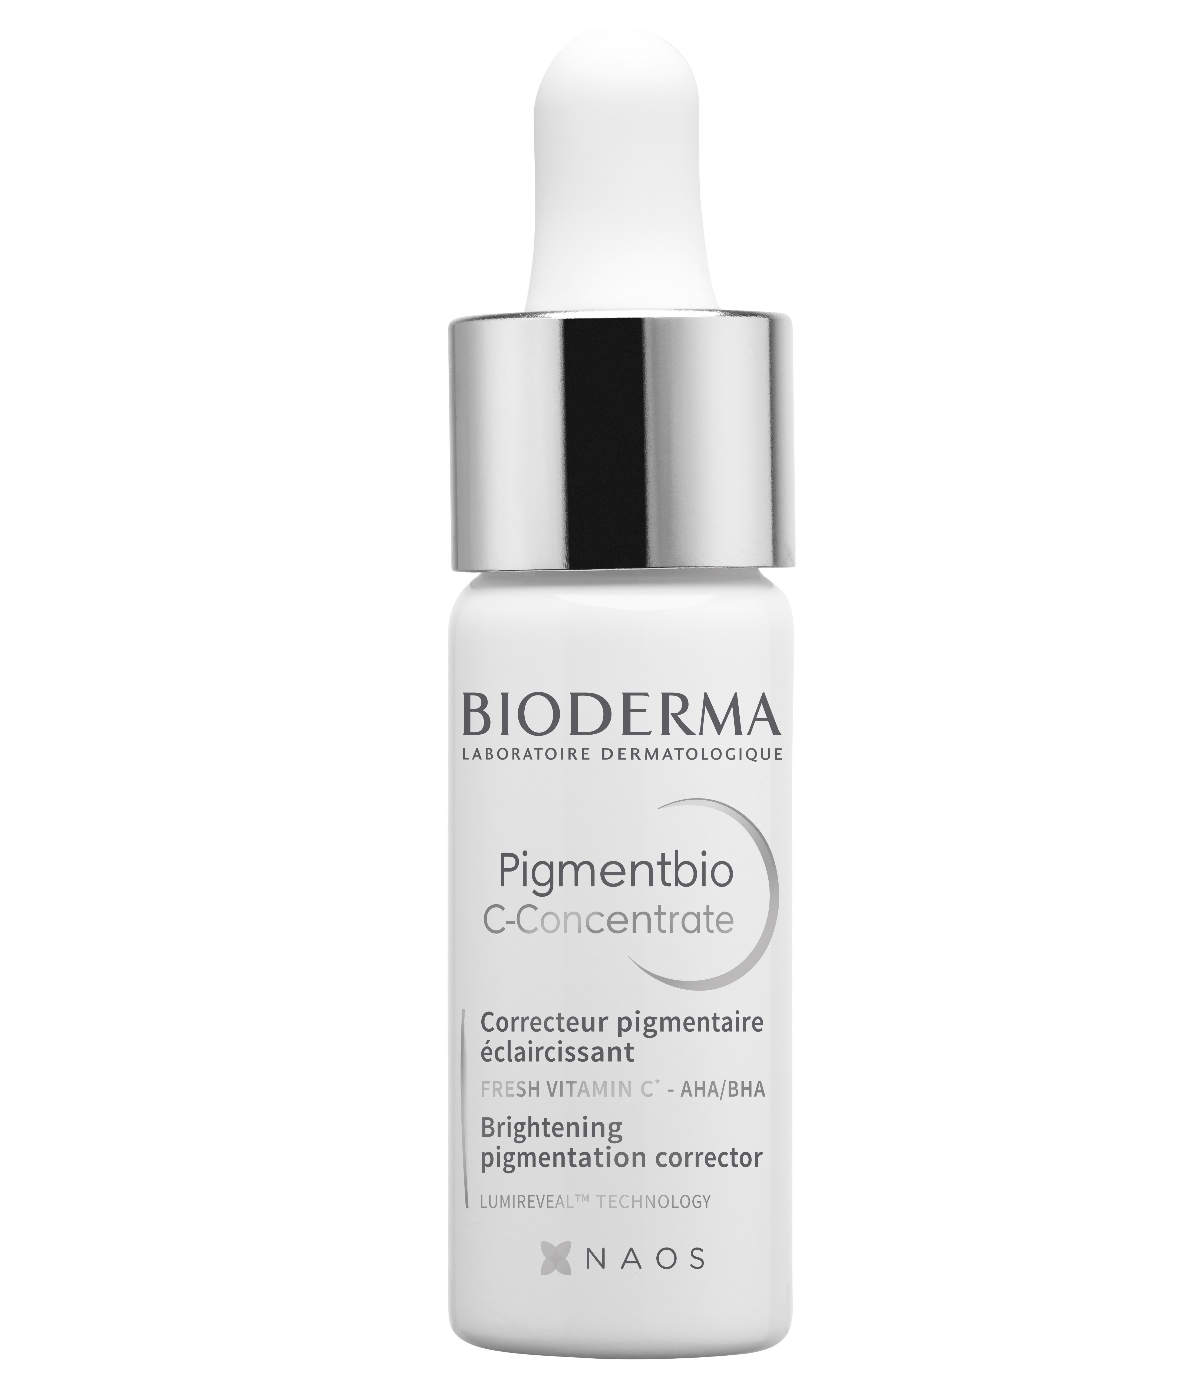 Pigment Bio C- Concentrate de Bioderma.